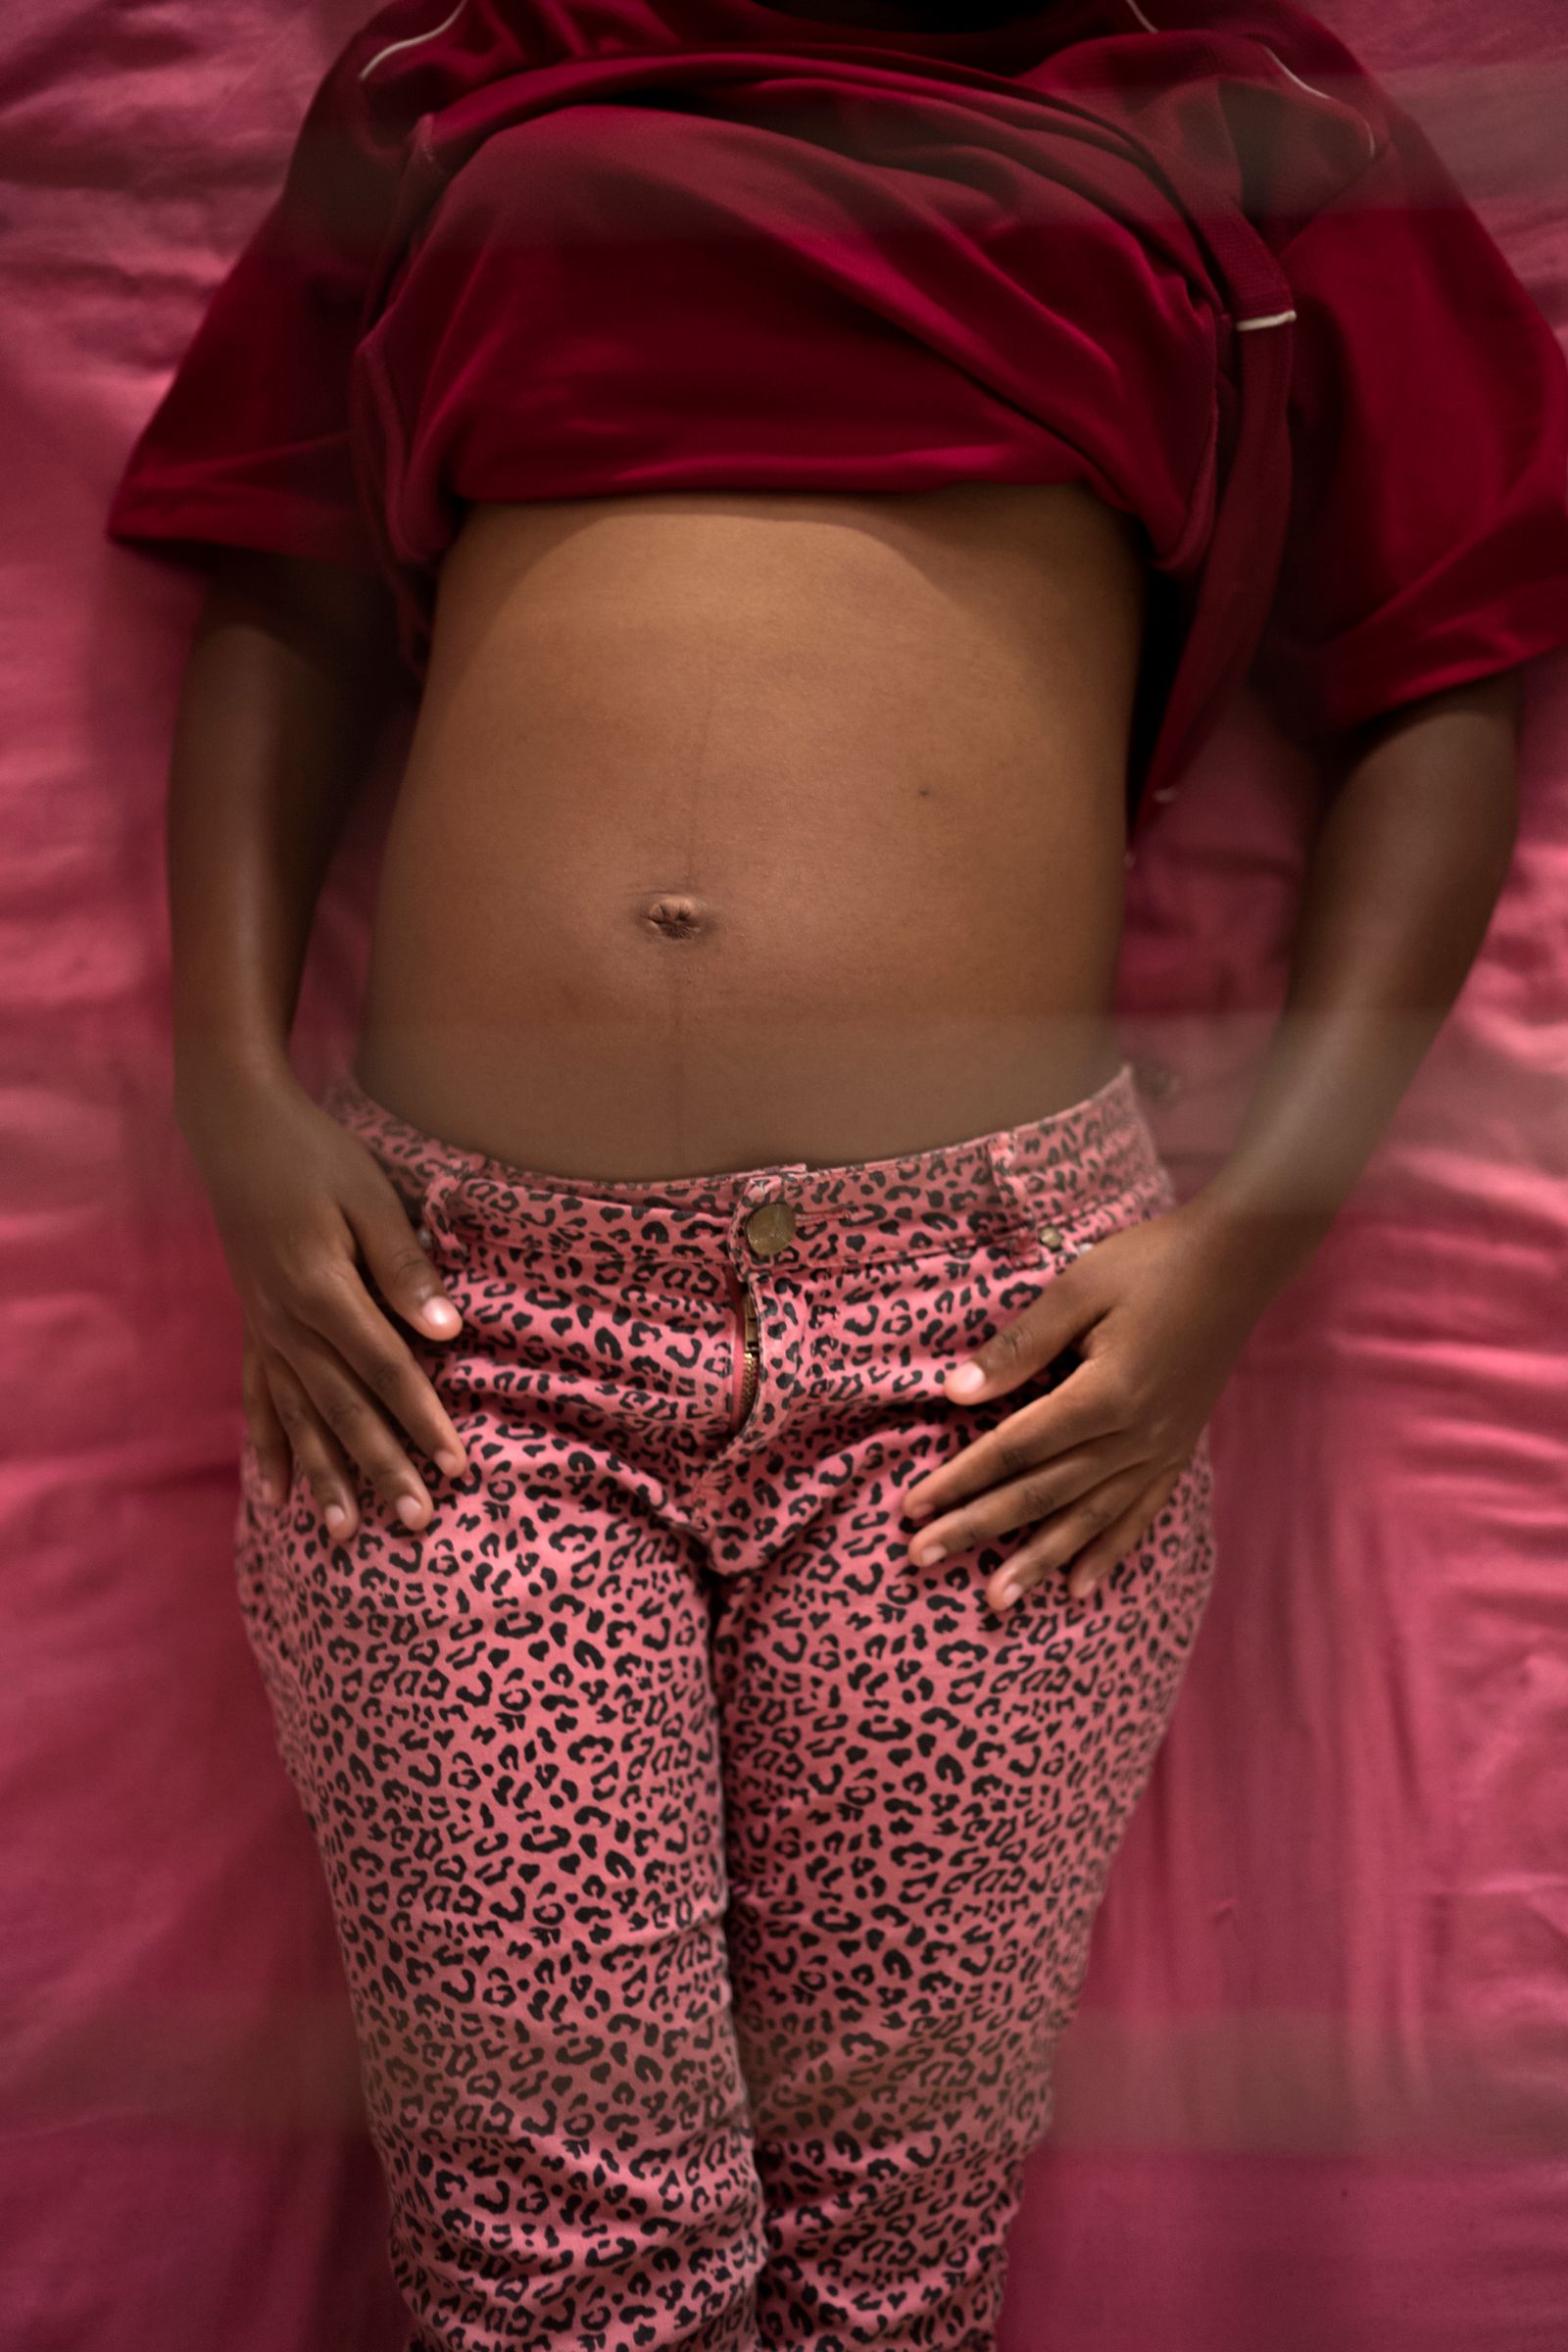 © Sofia Busk - Image from the Maisha Girls photography project